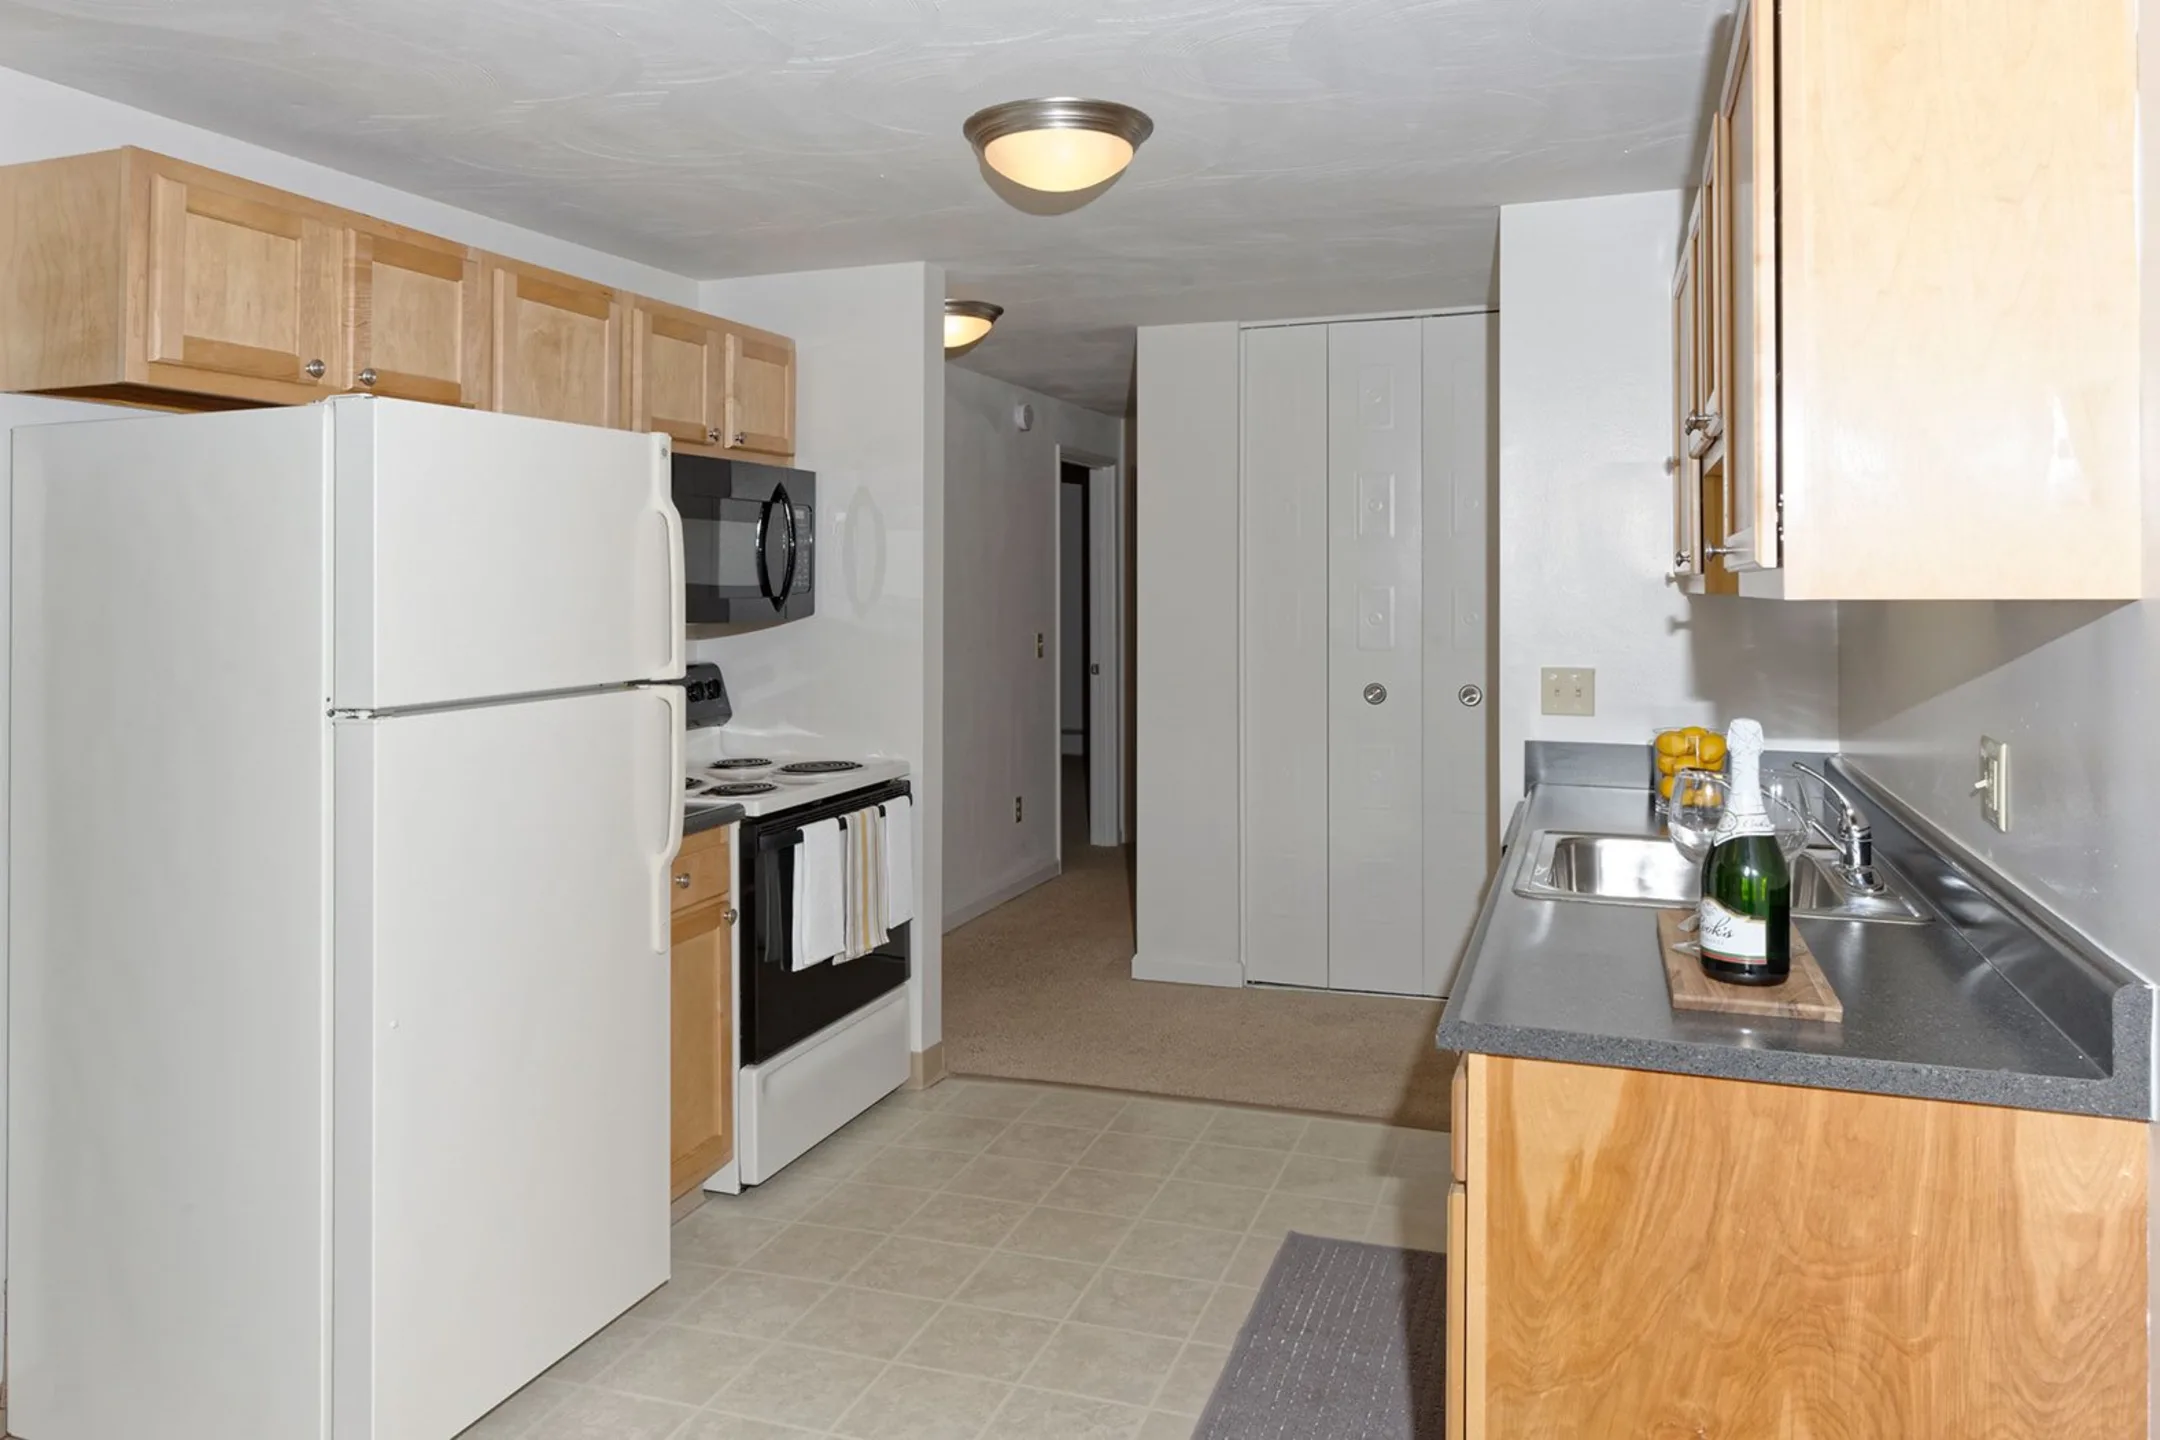 Kitchen - Clover Park Apartments - Rochester, NY